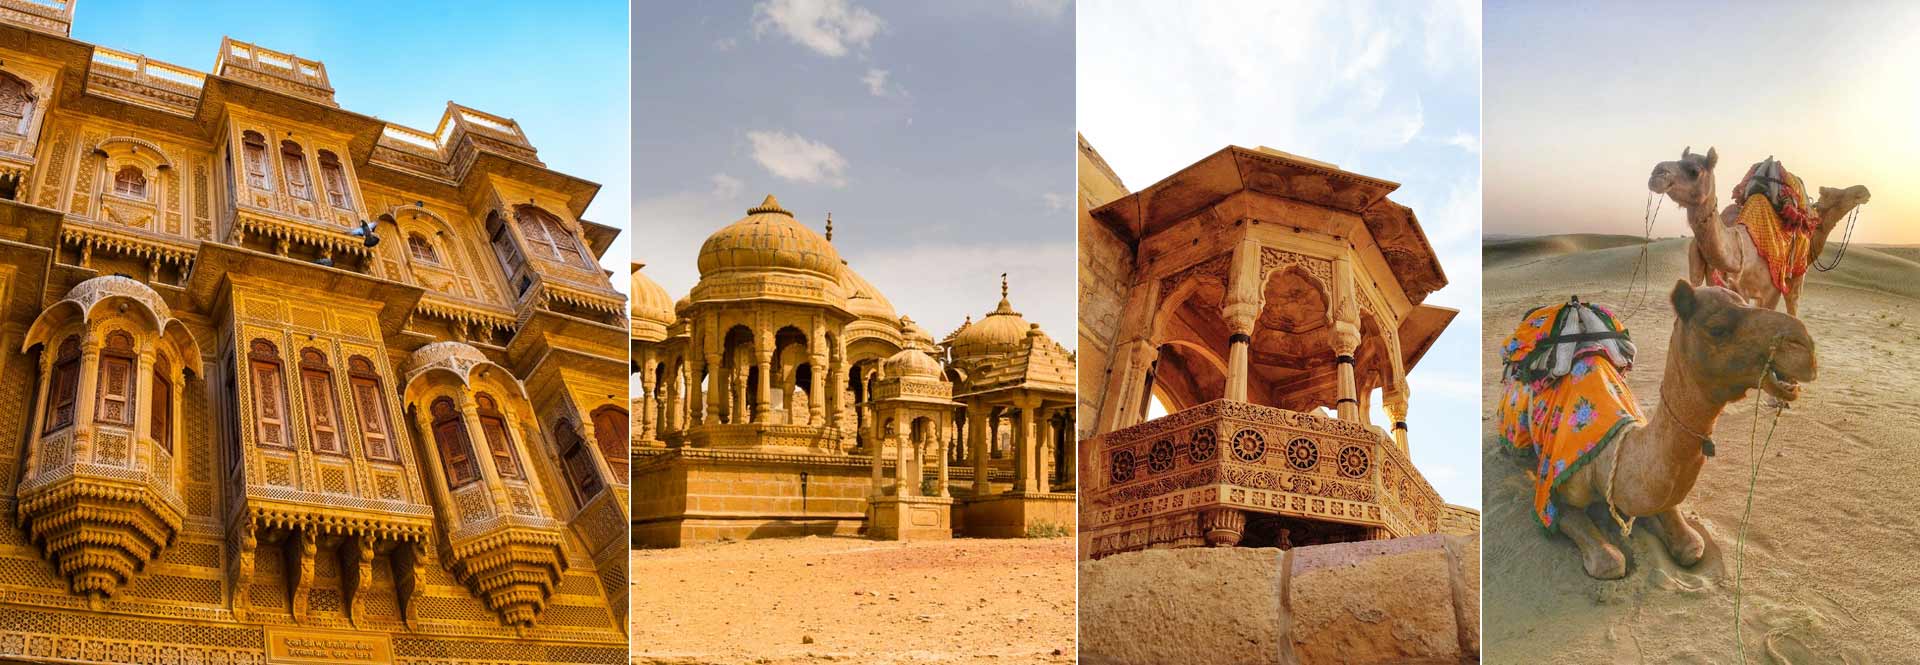 Jaisalmer History